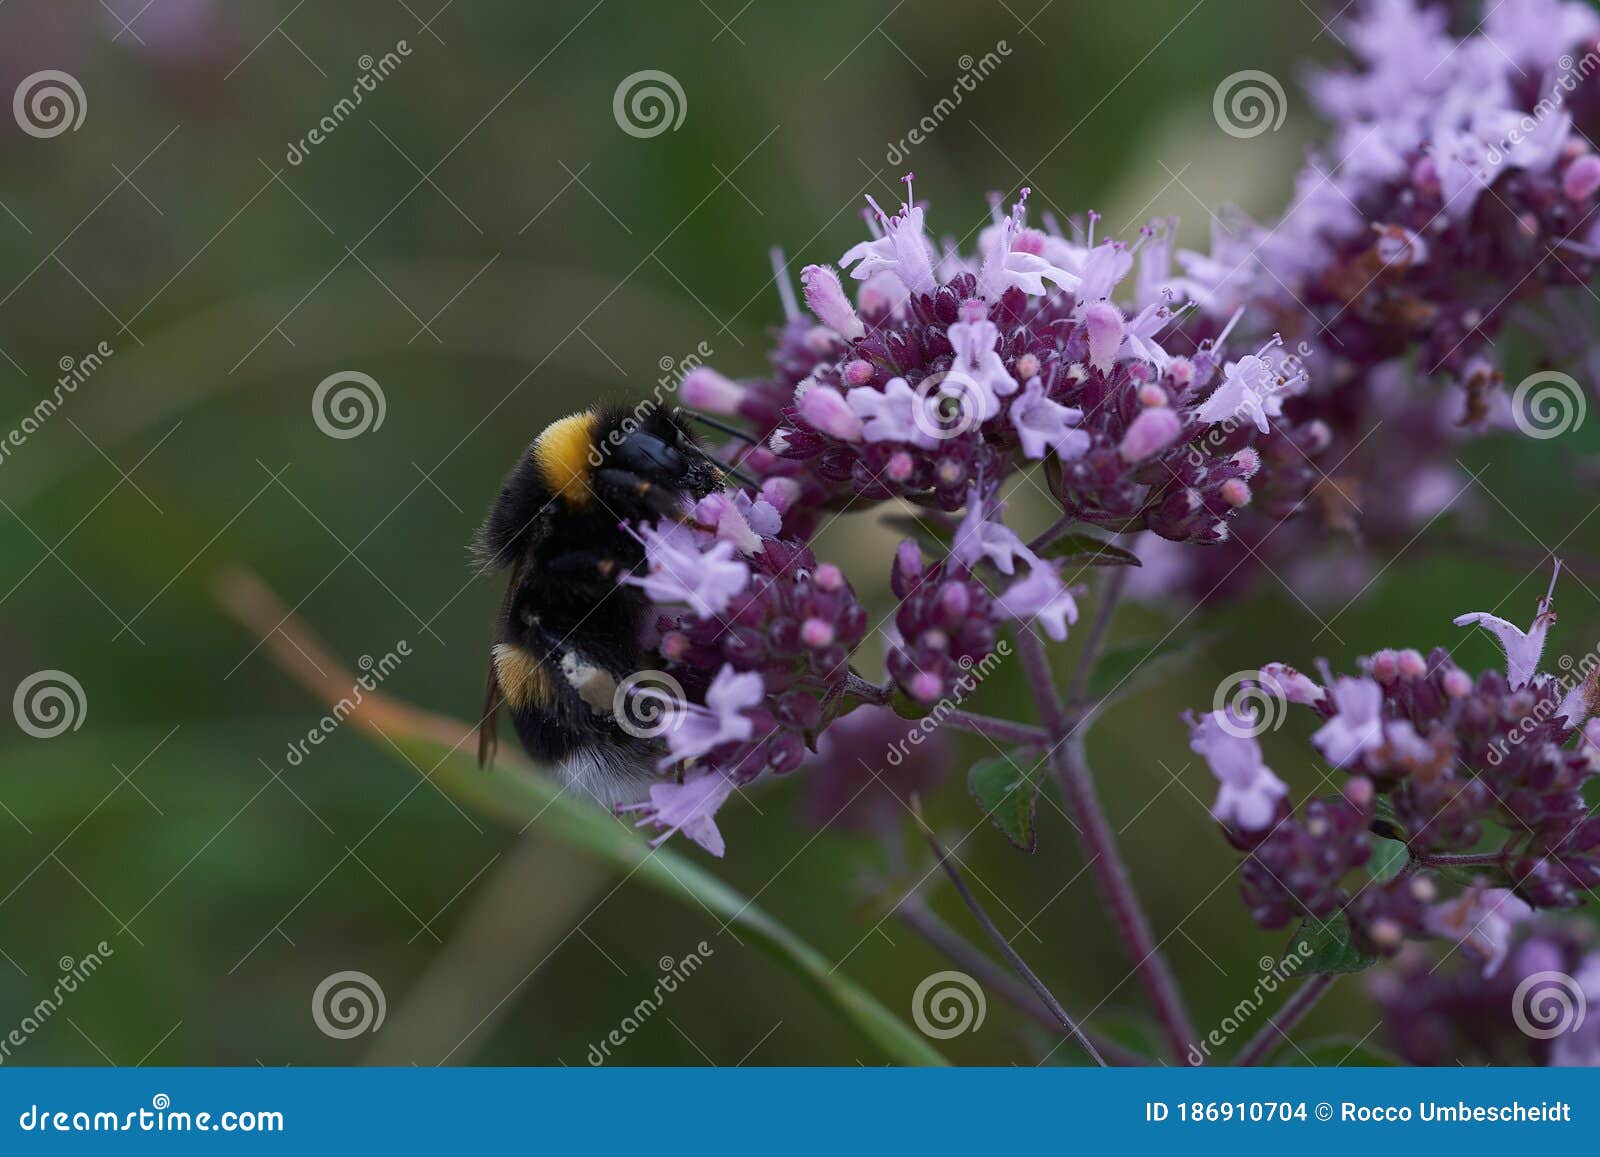 bumblebee bumble bee humble bombus apidae violet flower